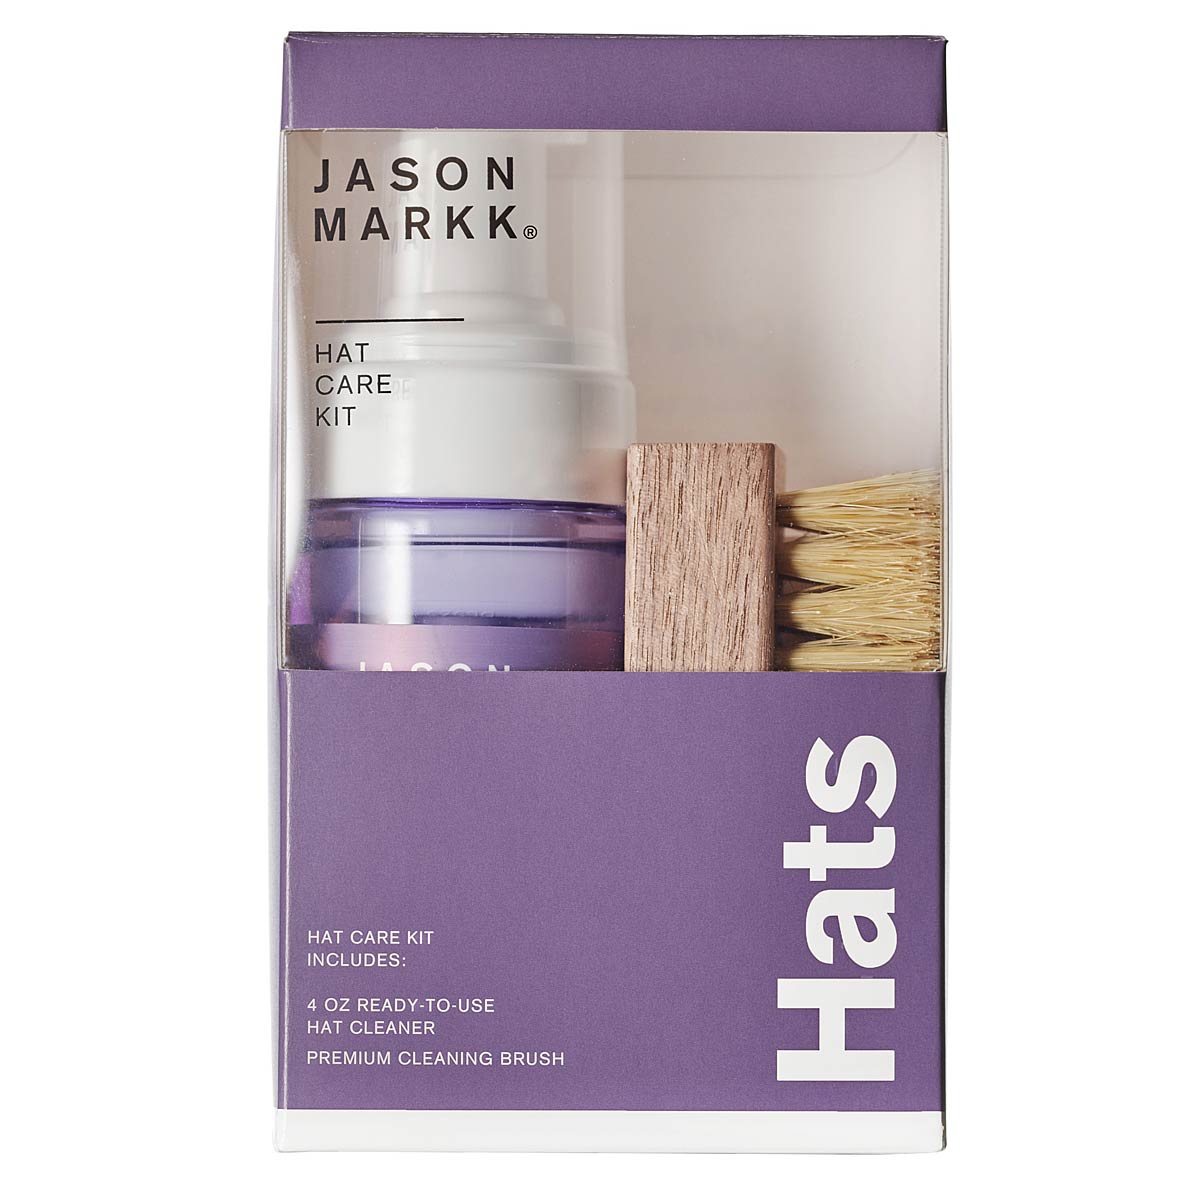 Jason Markk Hat Care Kit, White/Purple